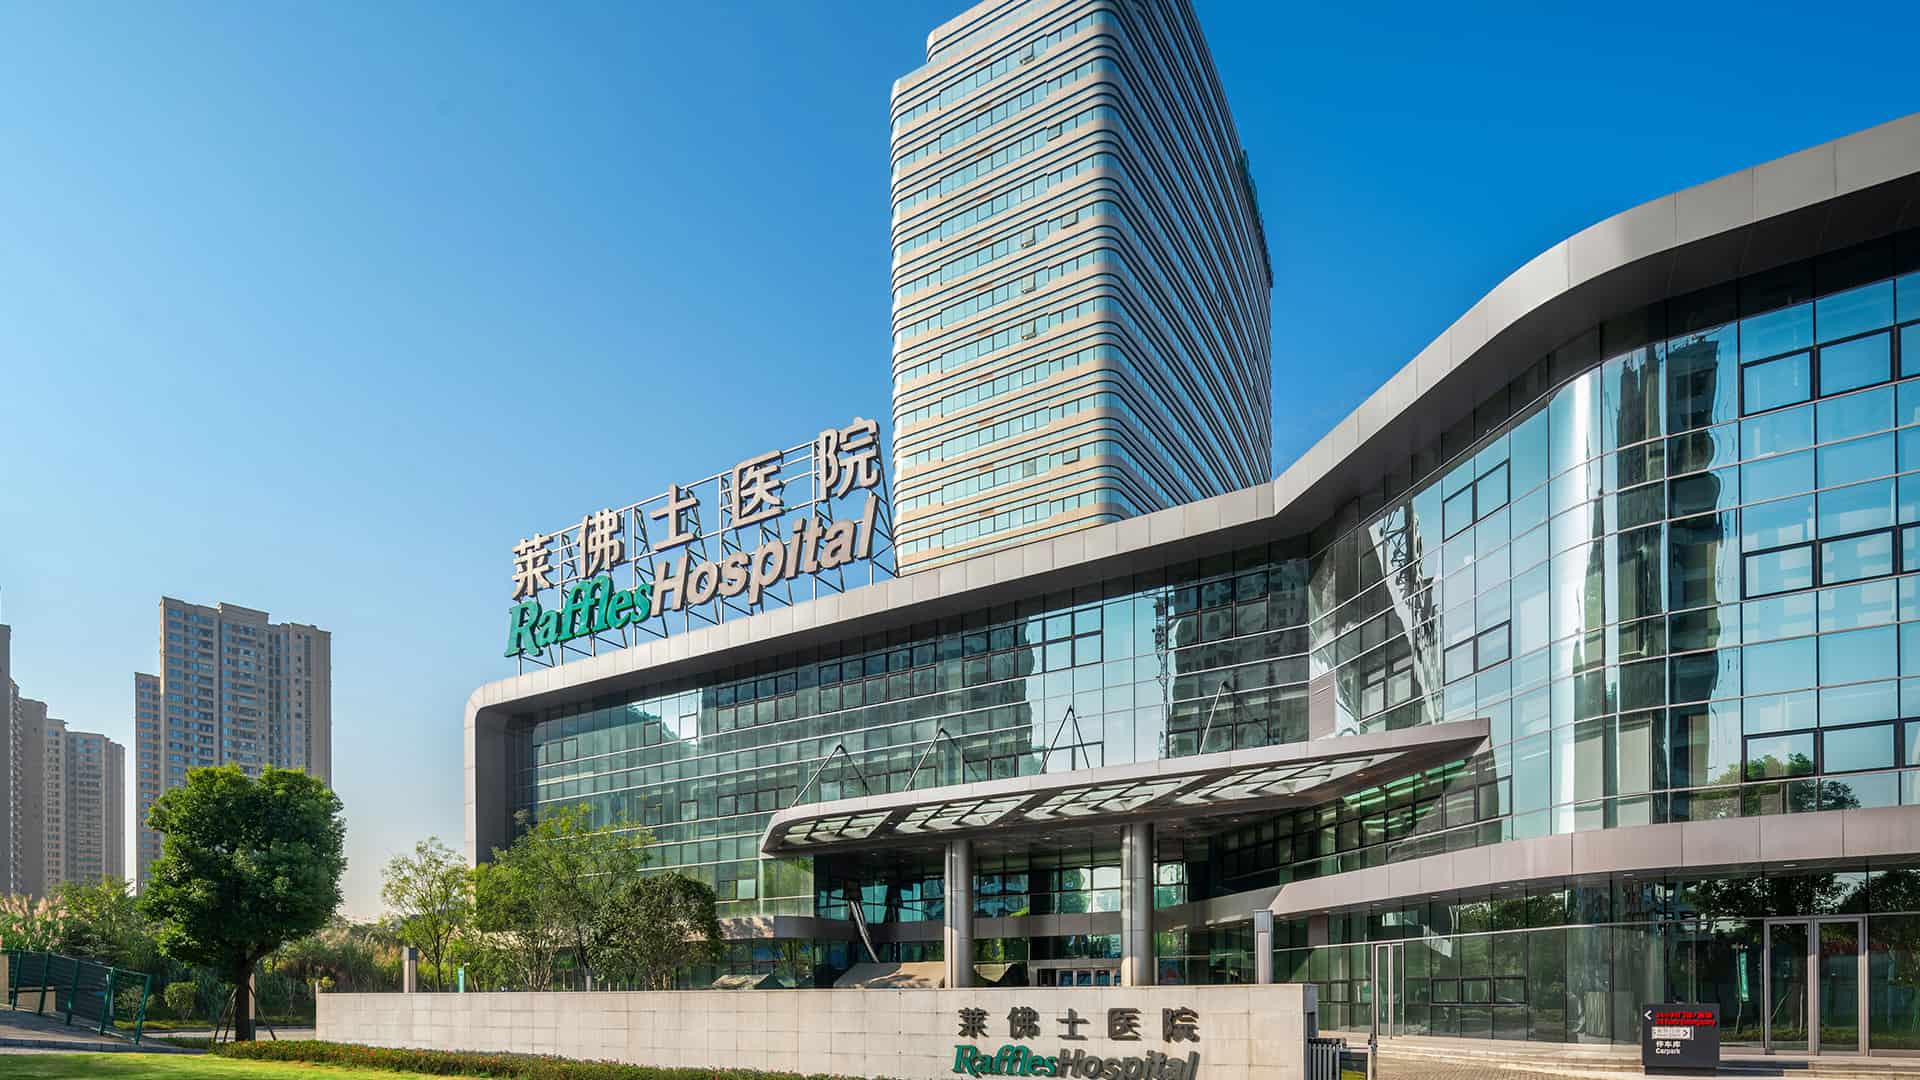 Raffles Hospital Chongqing China